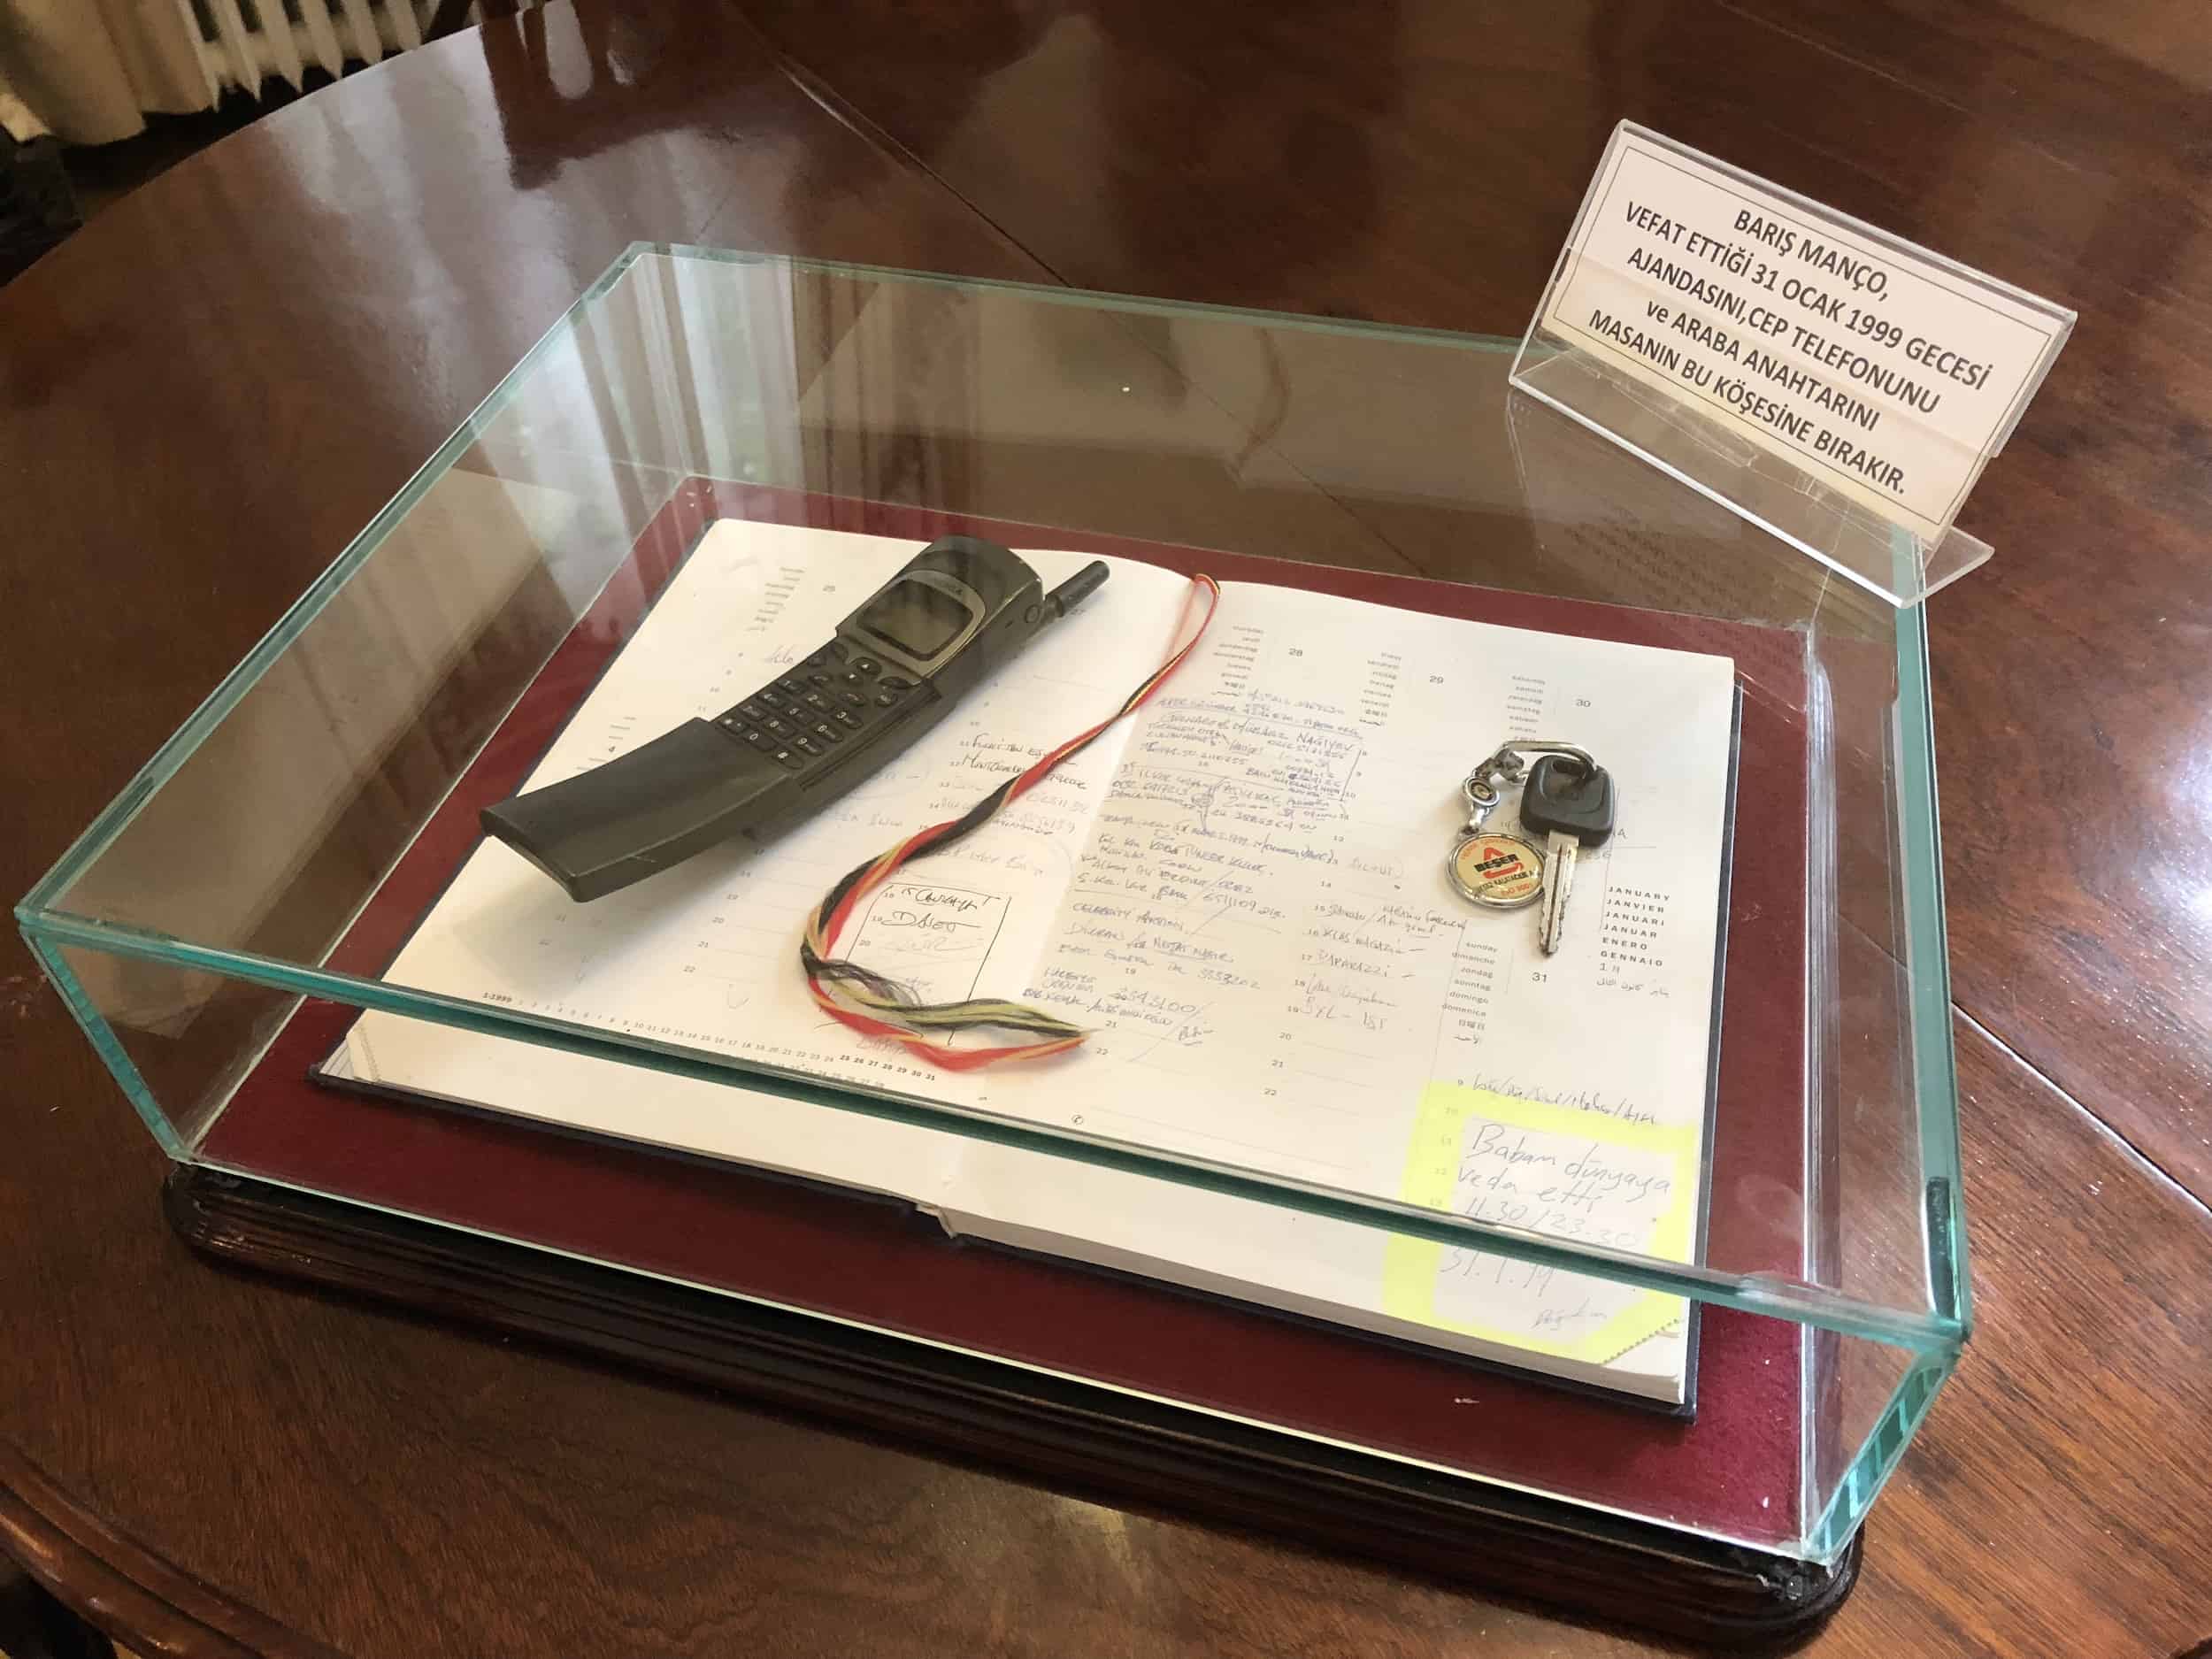 Car keys, cell phone, and agenda at the Barış Manço Museum in Istanbul, Turkey